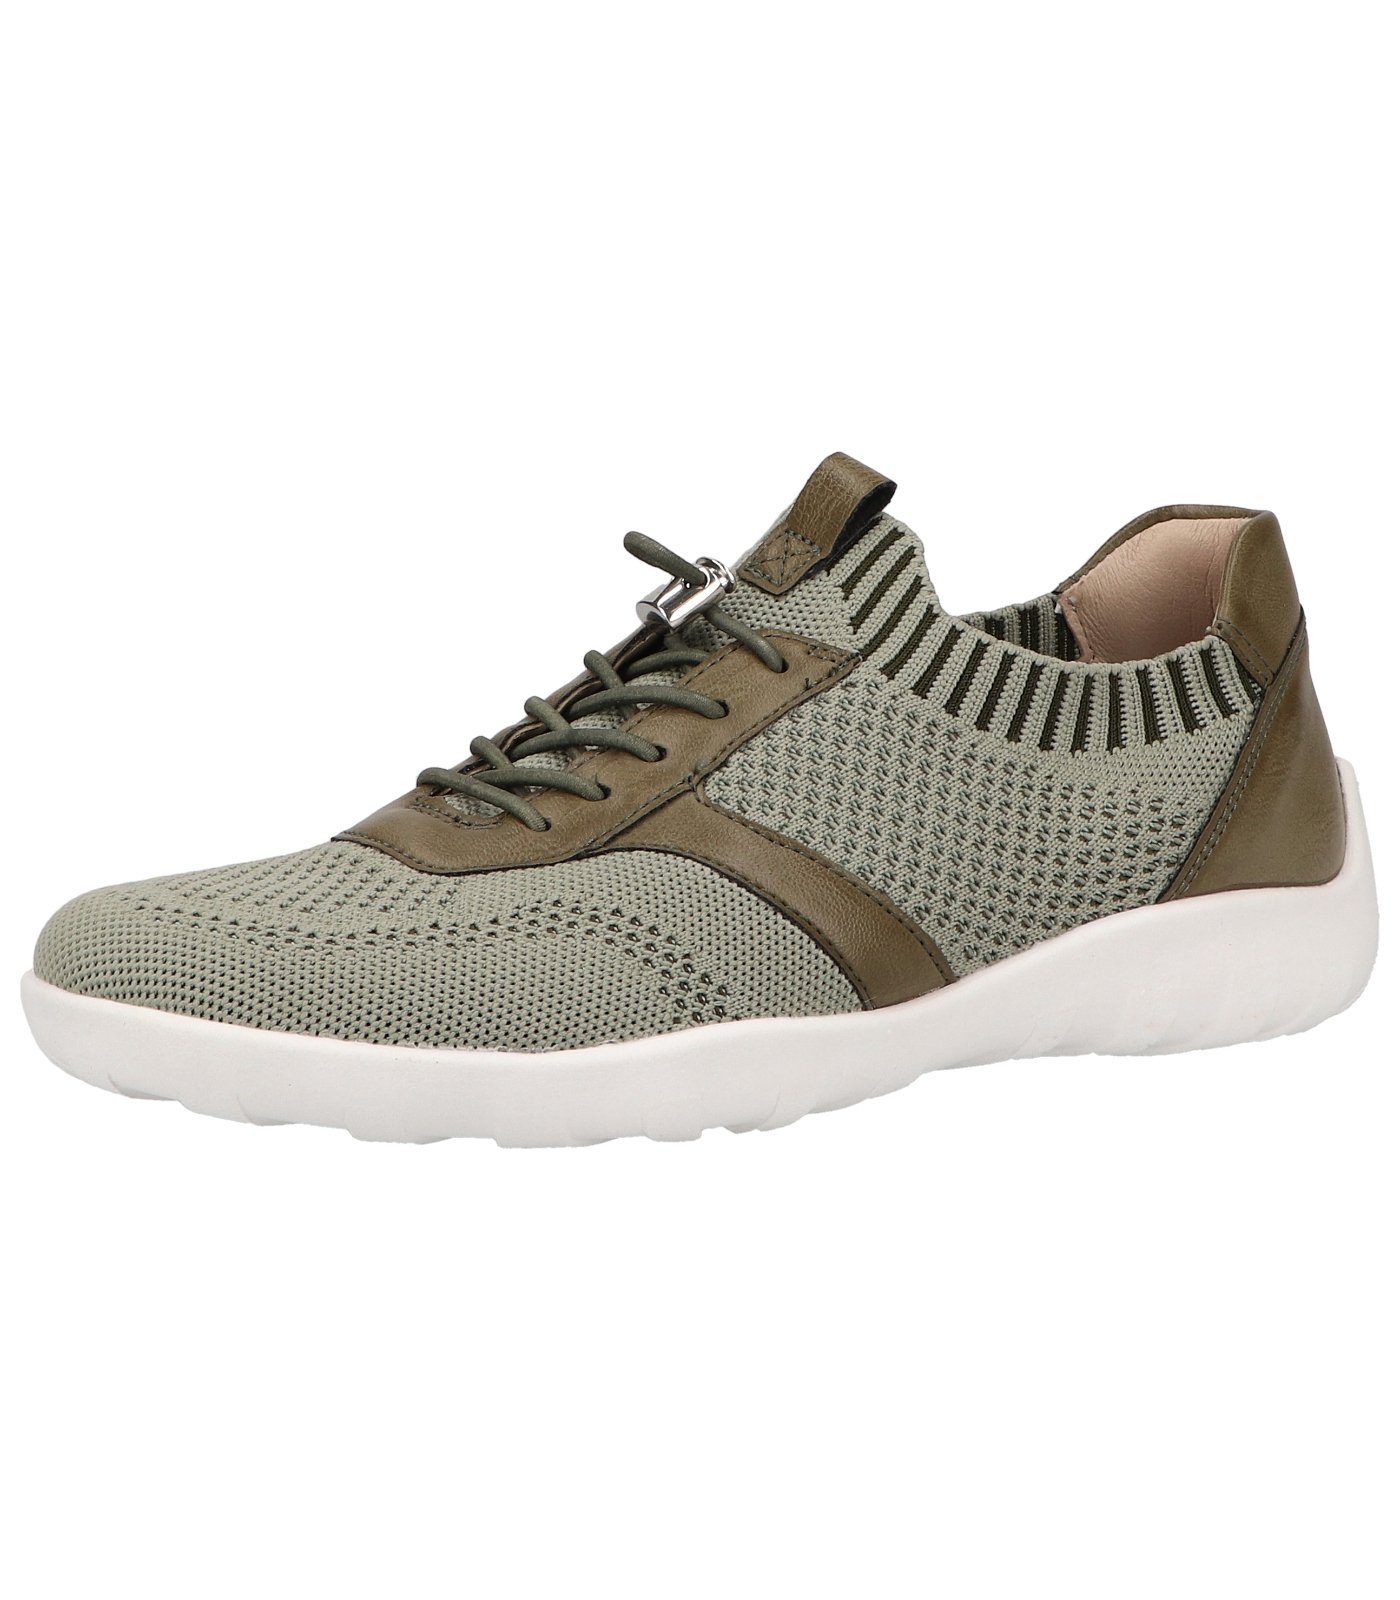 Lederimitat/Textil Remonte Sneaker Sneaker grün